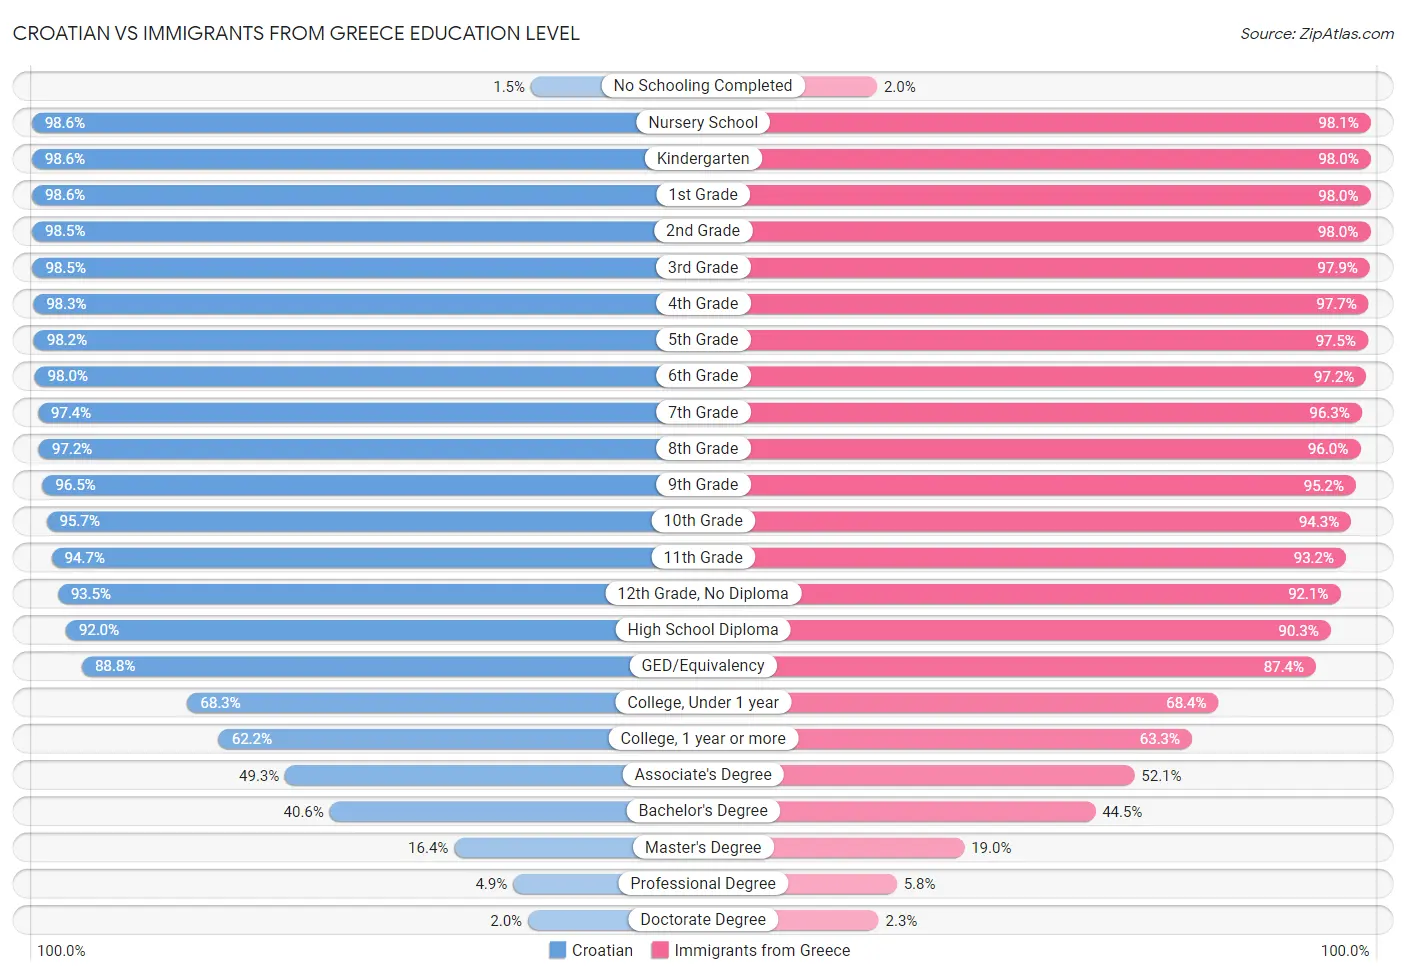 Croatian vs Immigrants from Greece Education Level